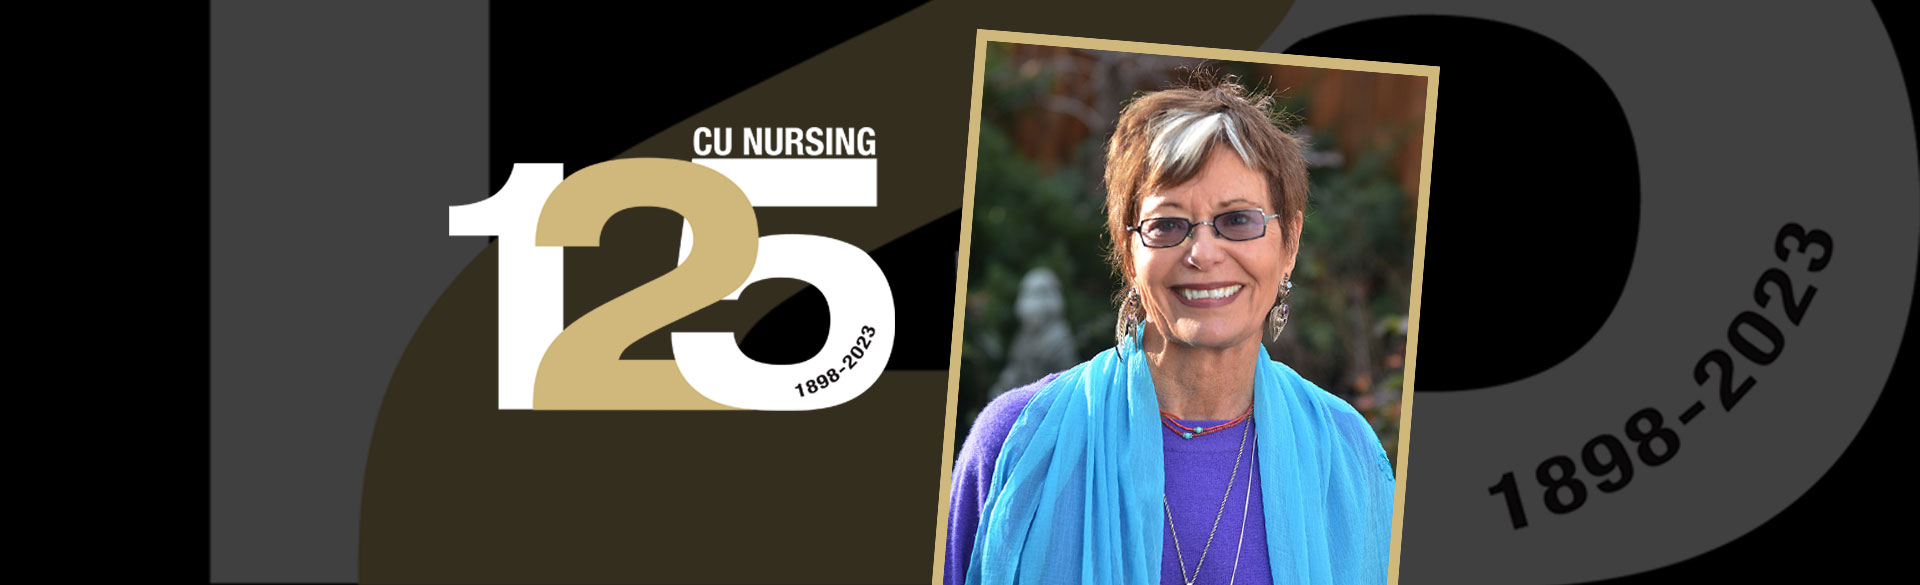 CU Nursing celebrates 125th Anniversary